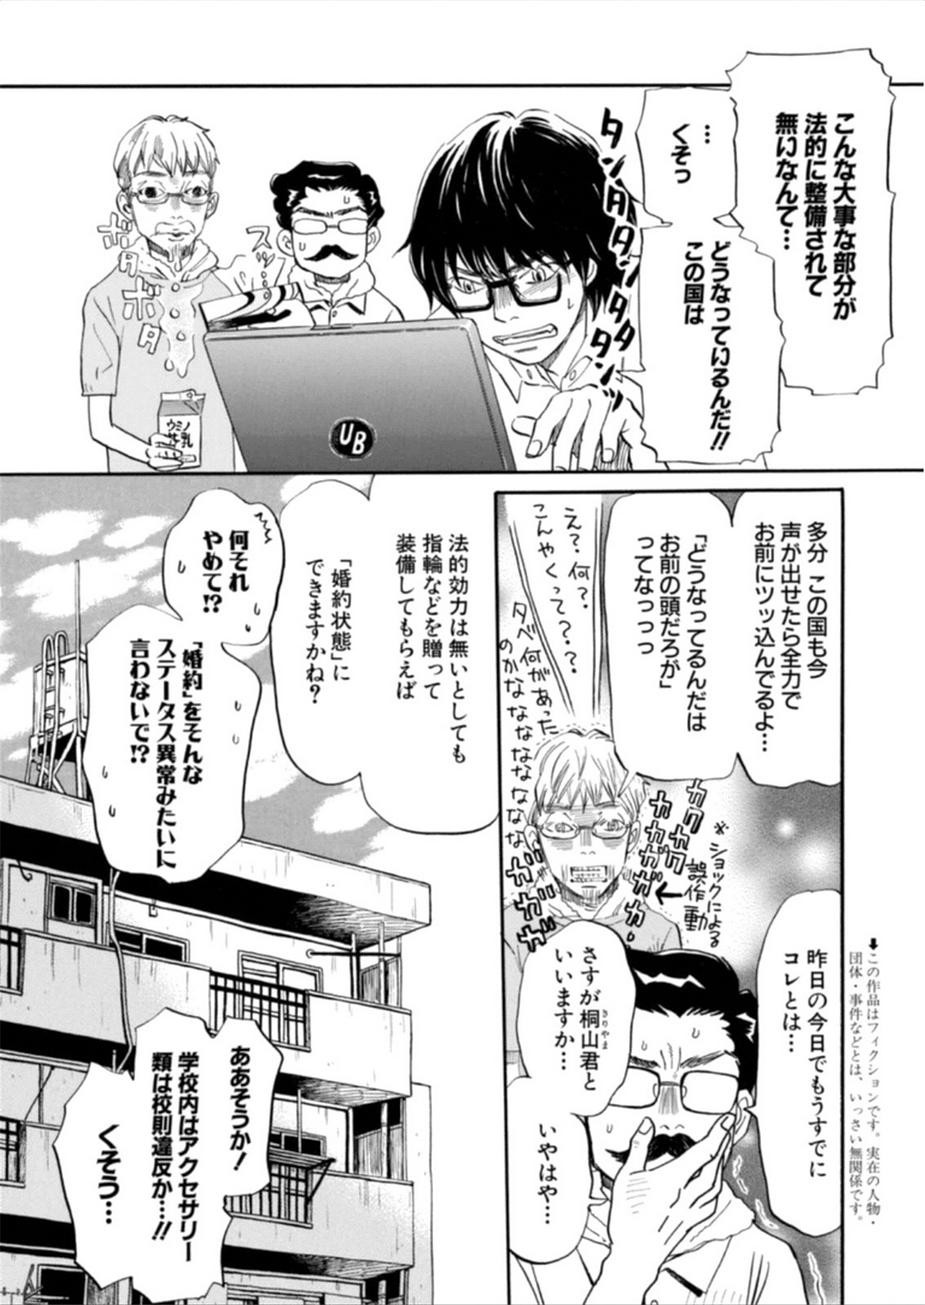 3 Gatsu no Lion - Chapter 105 - Page 3